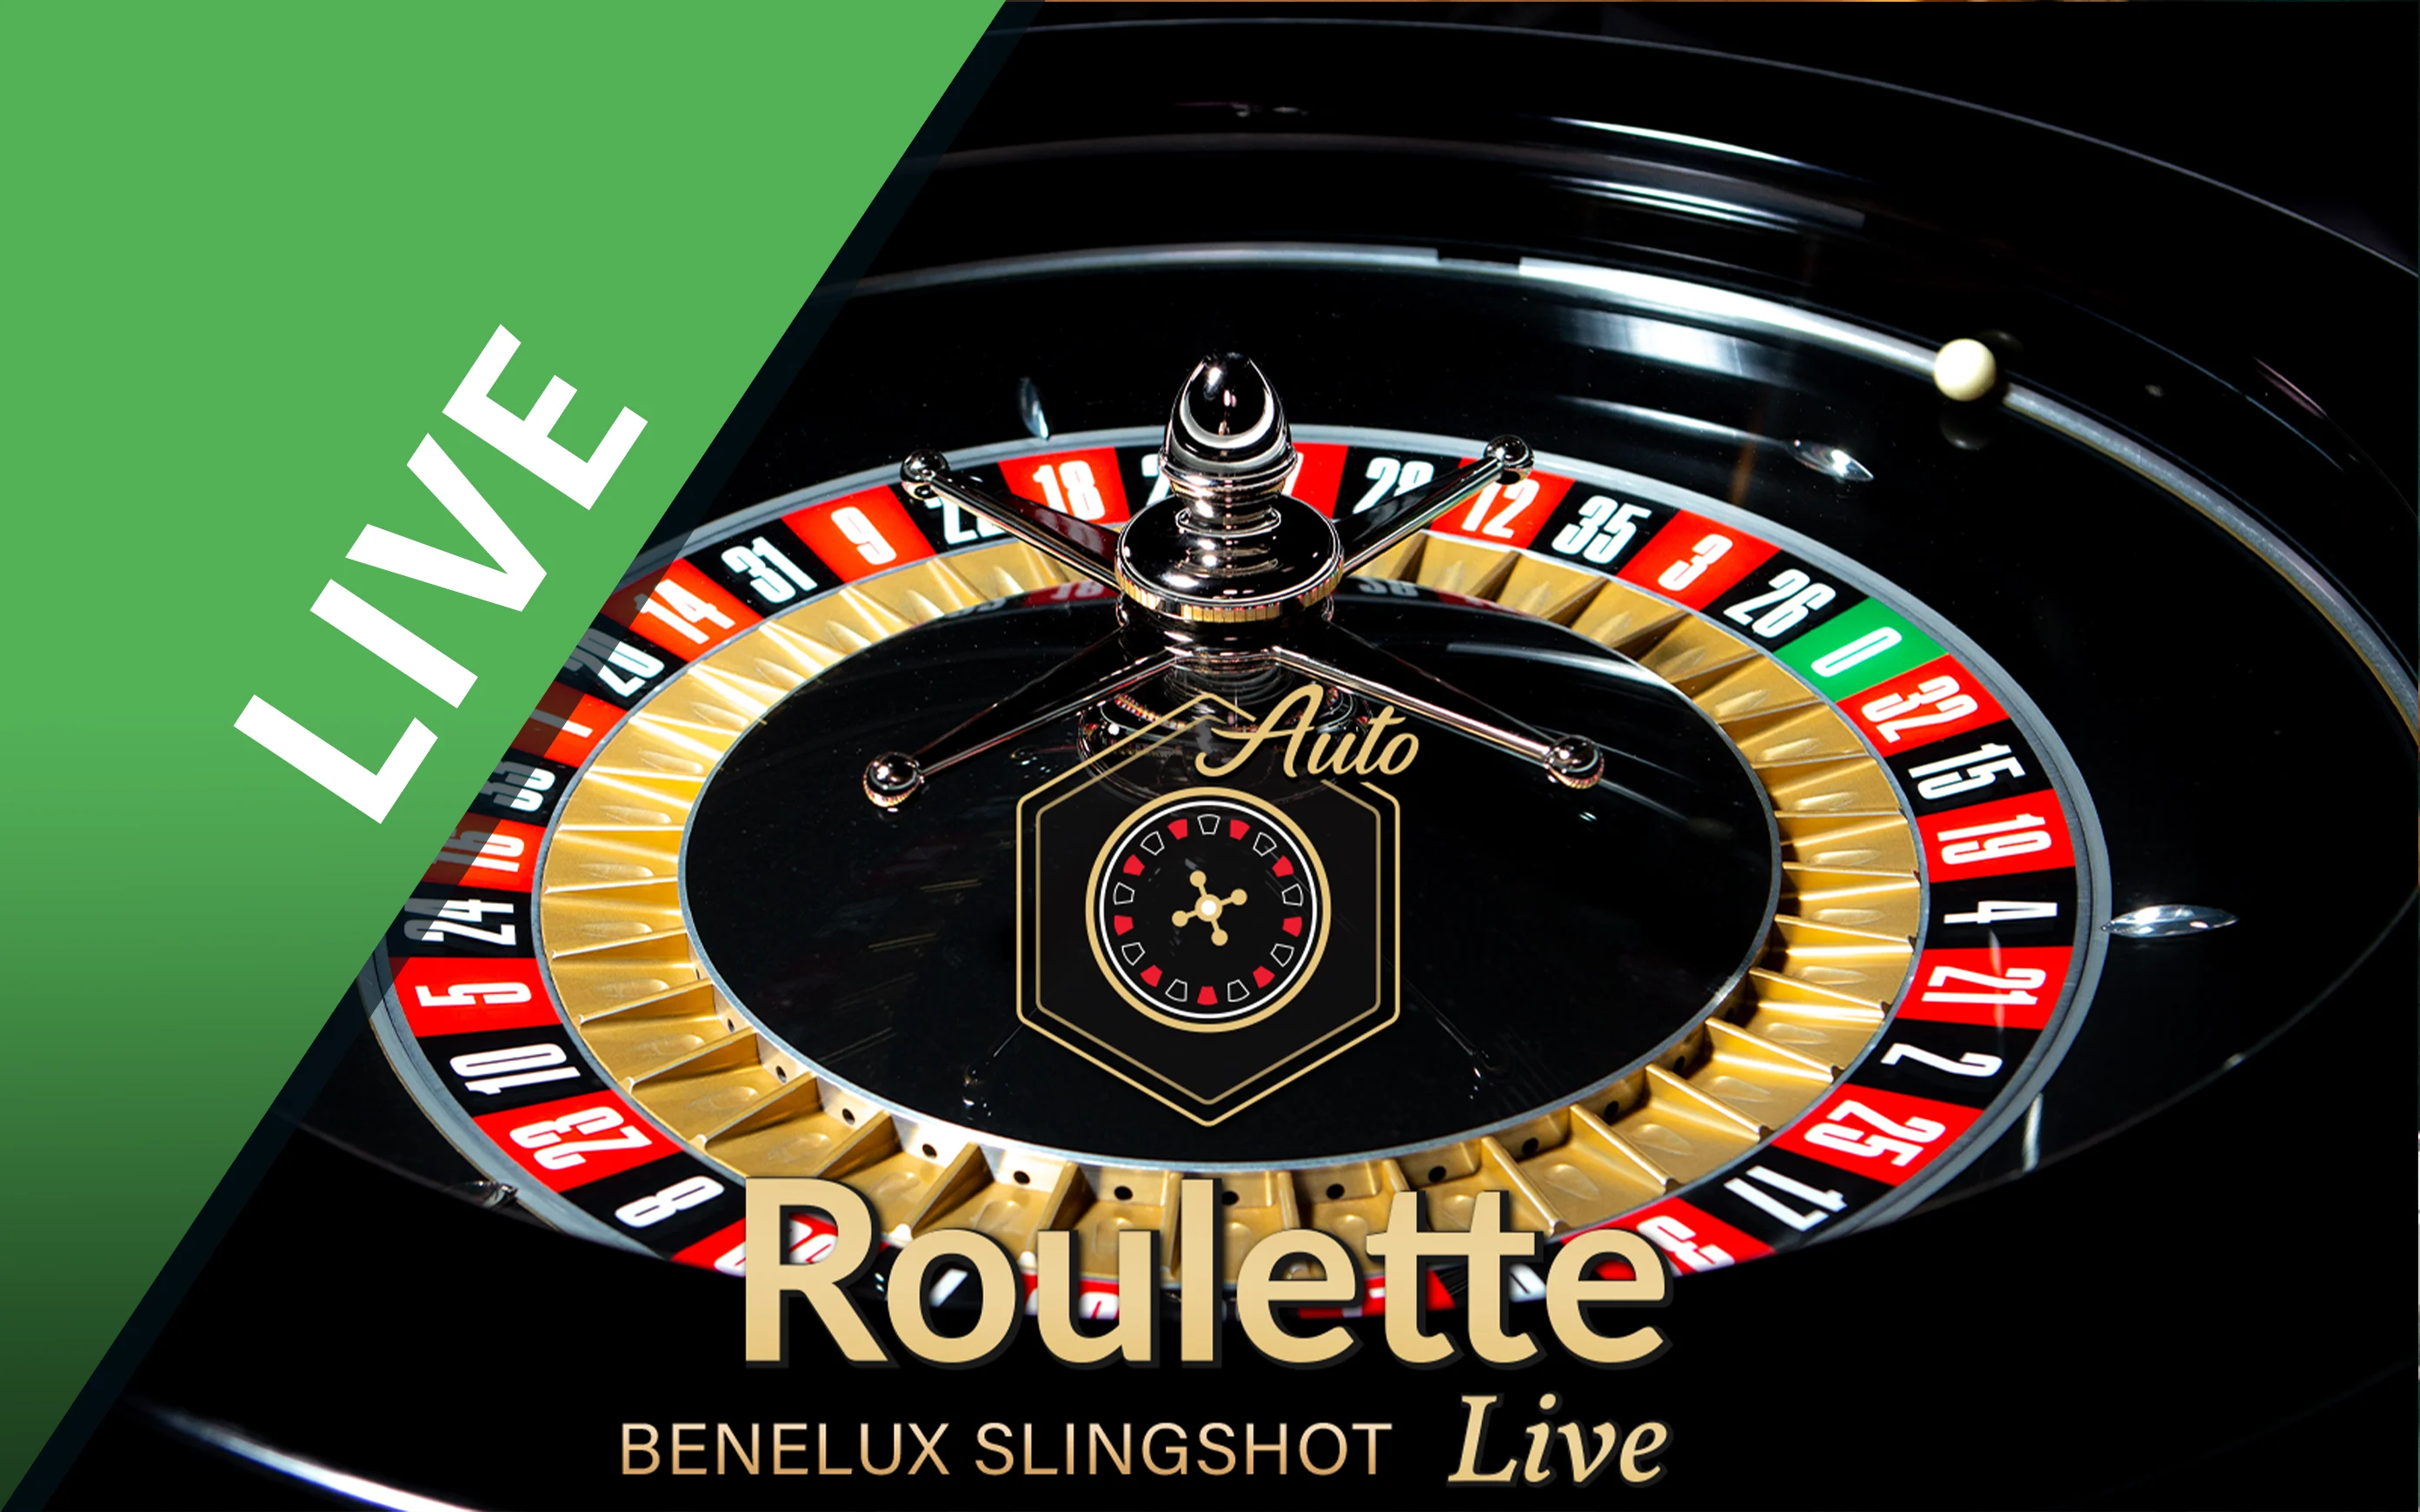 Play Benelux Slingshot Roulette on Starcasino.be online casino